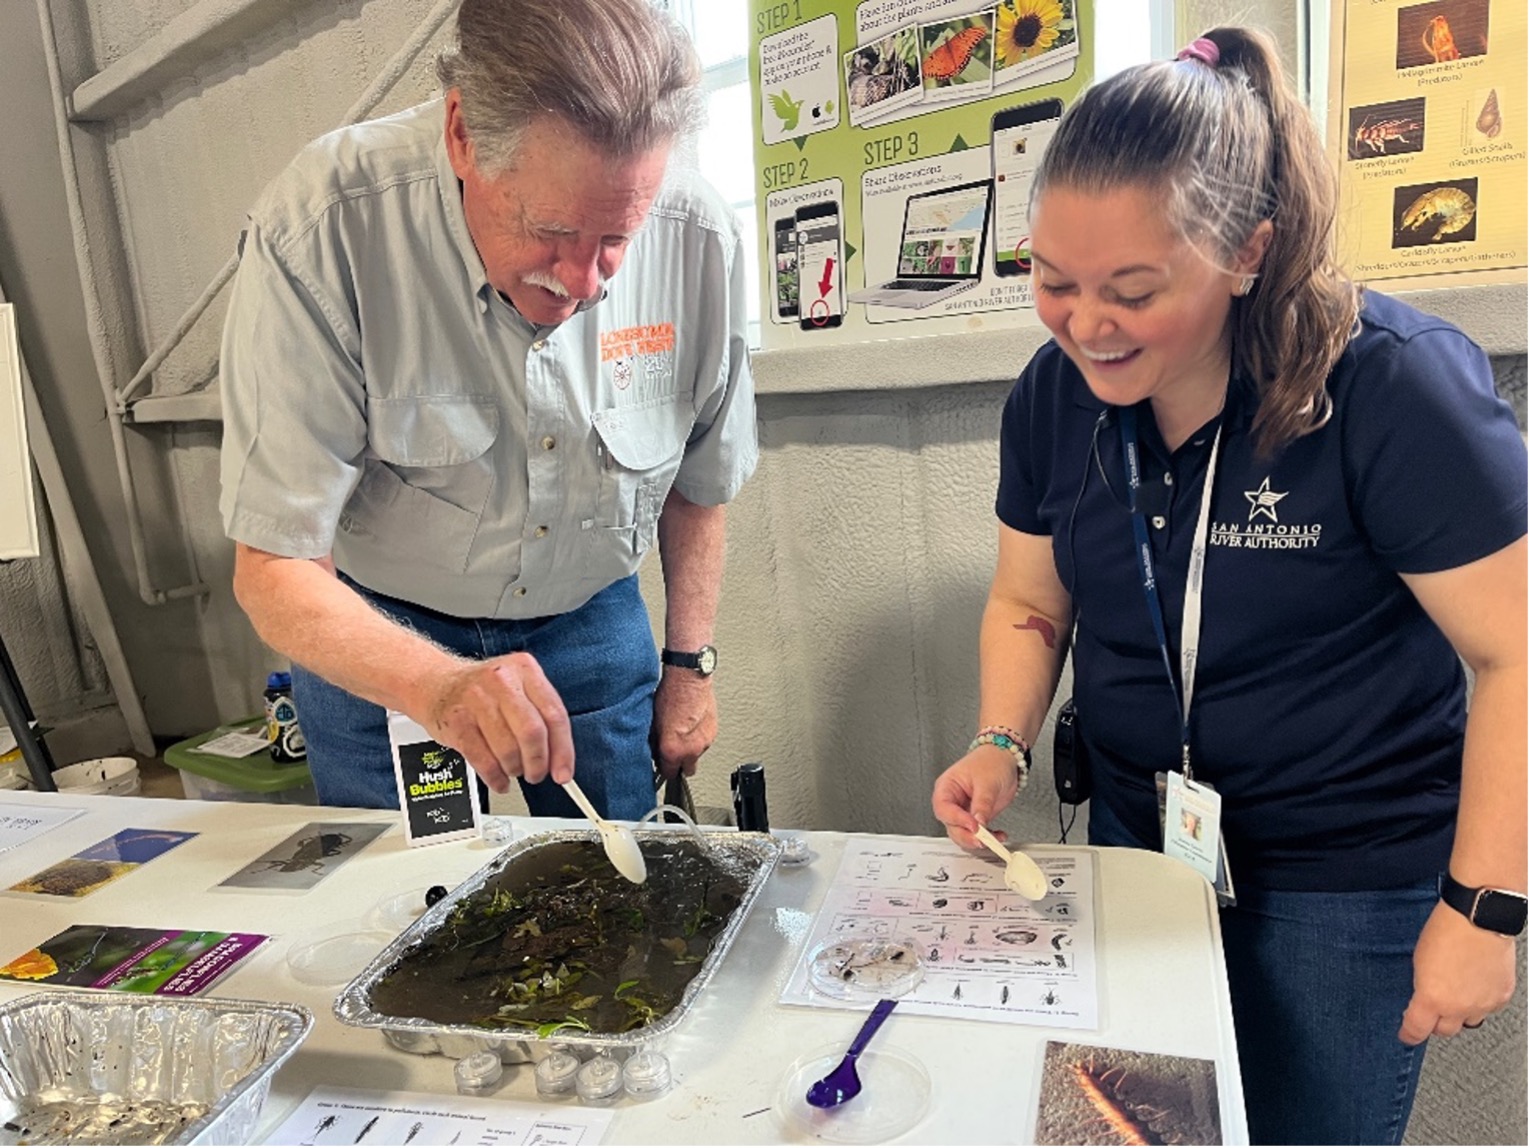 Board member Trip Ruckman and Janine Garcia observe arthropods in the soil.